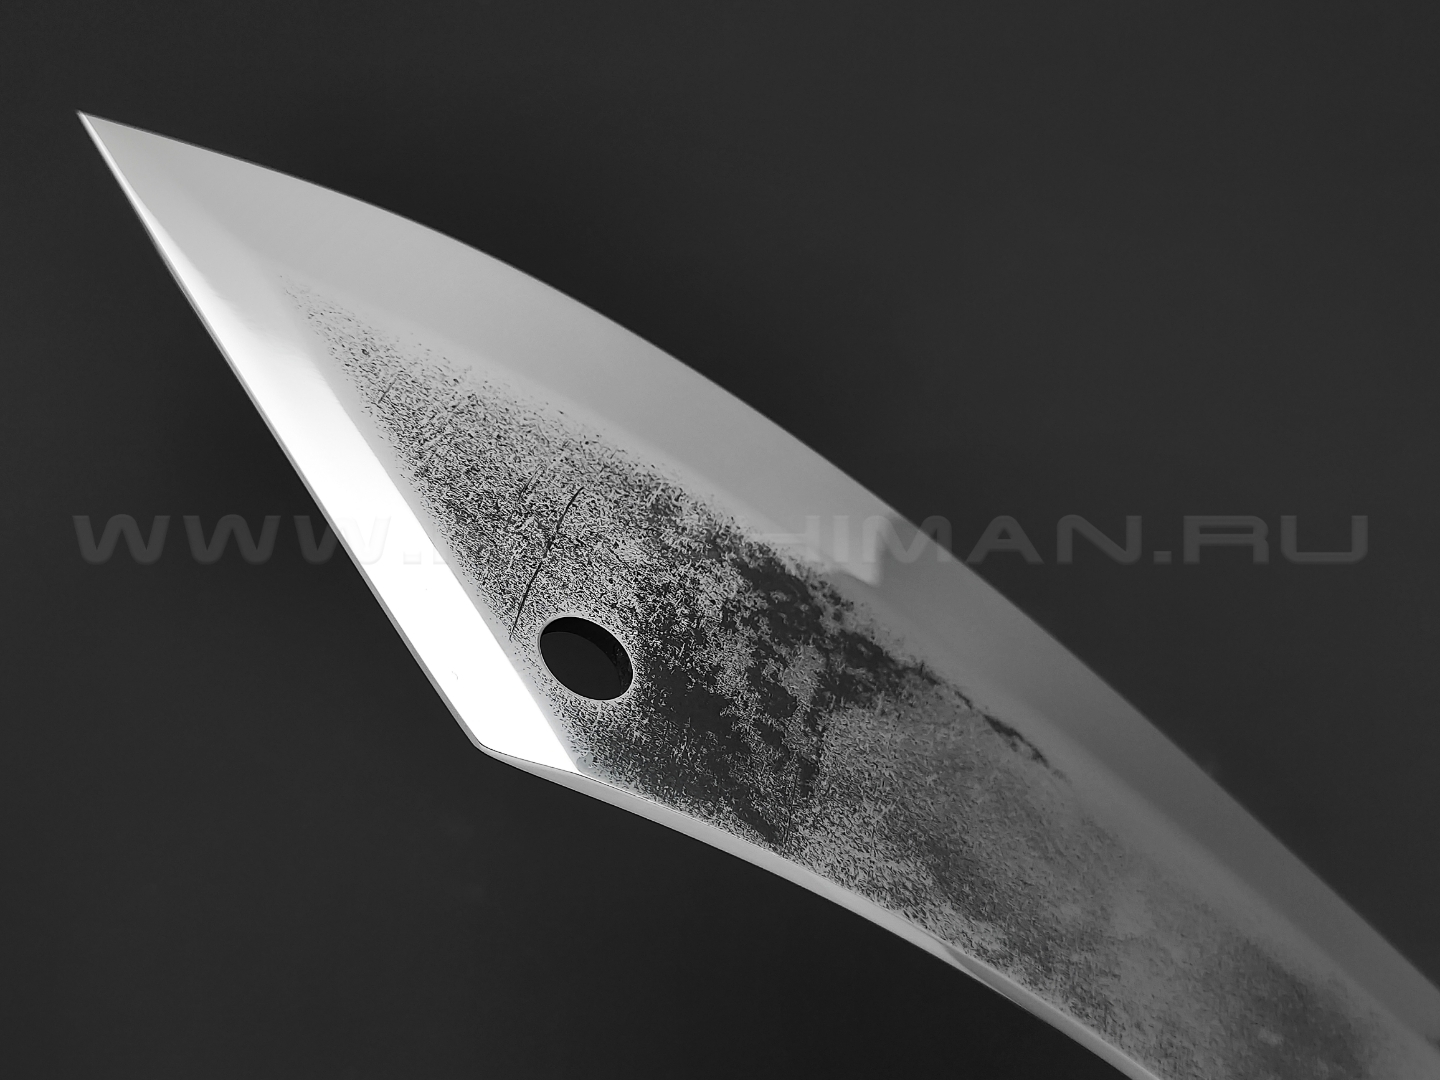 Нож "Биг Фуд" сталь N690, рукоять венге (Товарищество Завьялова)